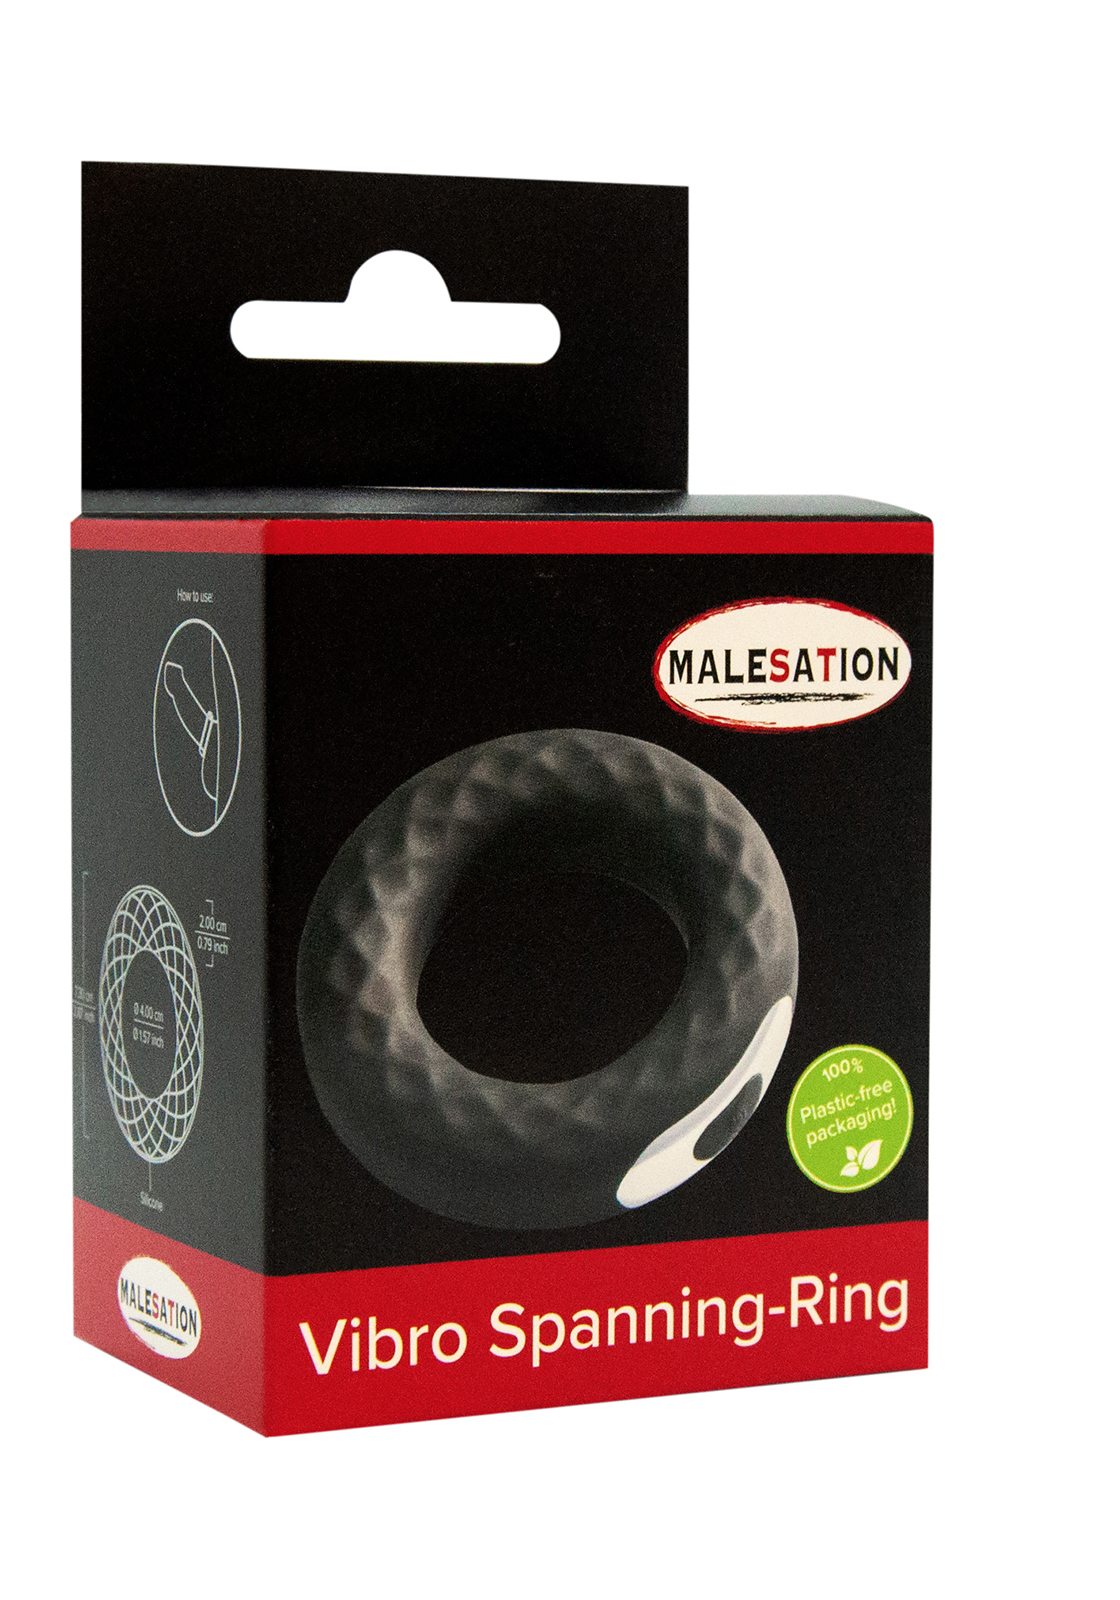 Malesation: Vibro Spanning-Ring